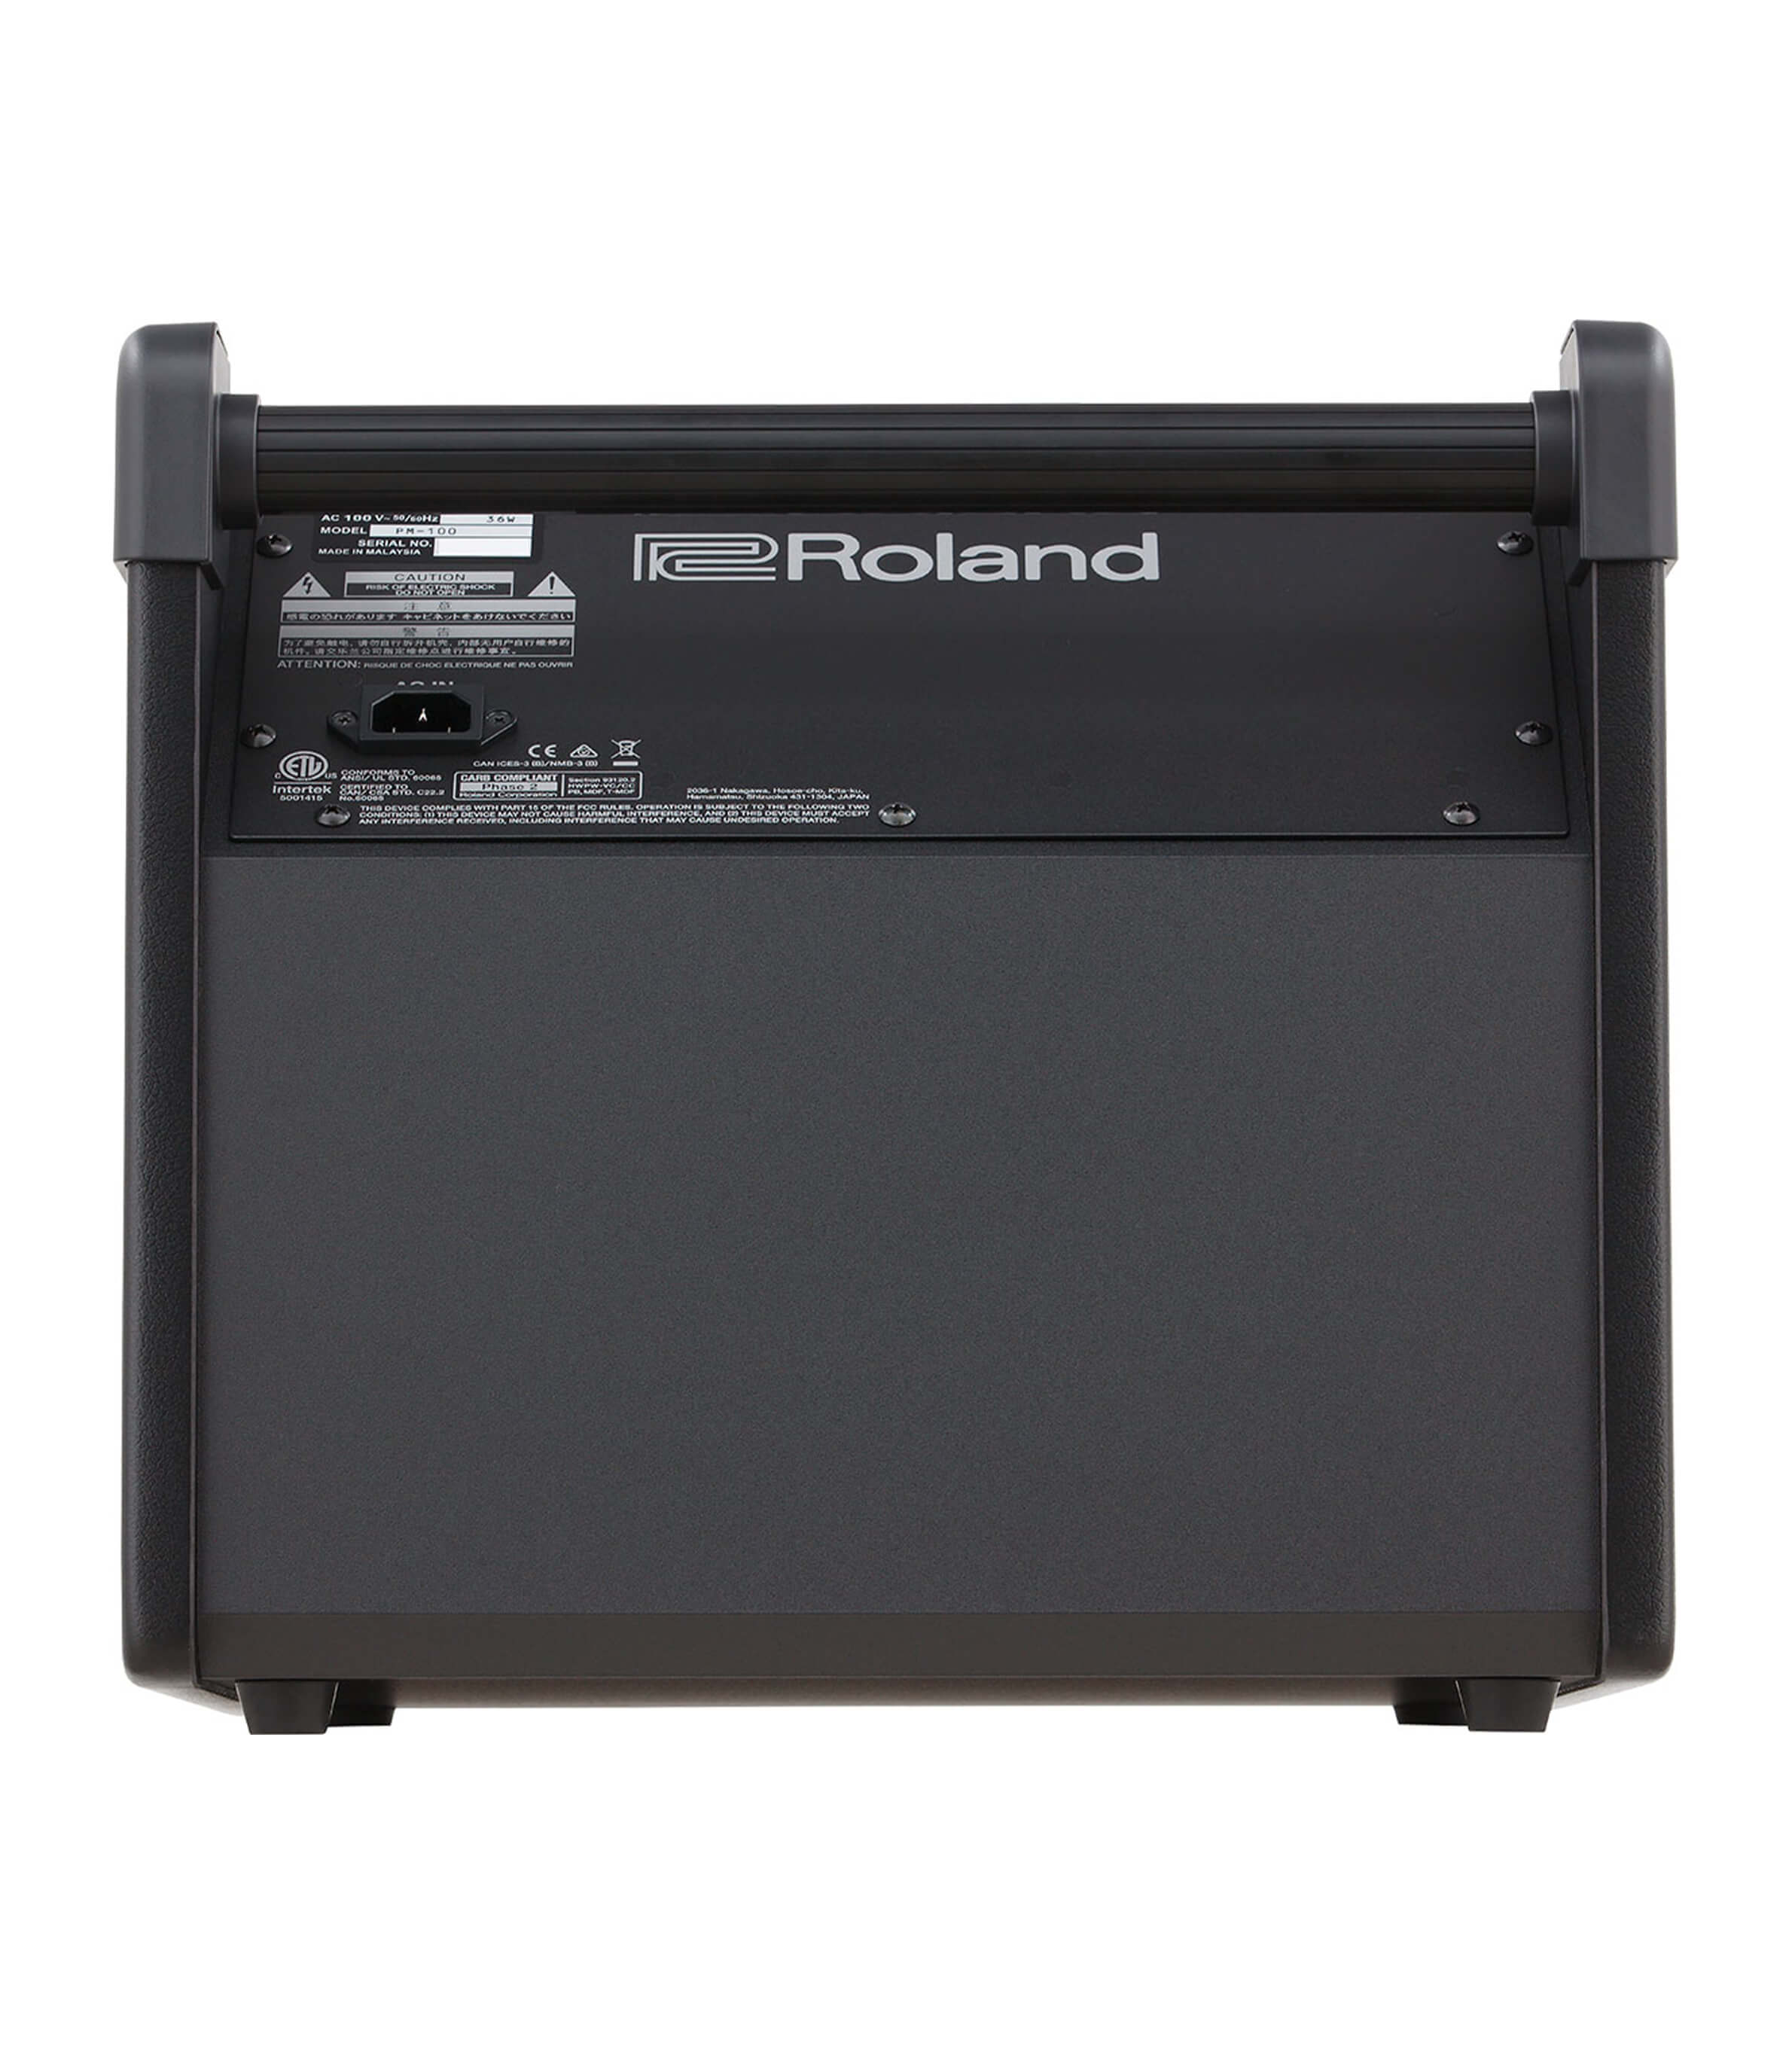 Roland PM 100 Personal Monitor - PM-100 - Melody House Dubai, UAE